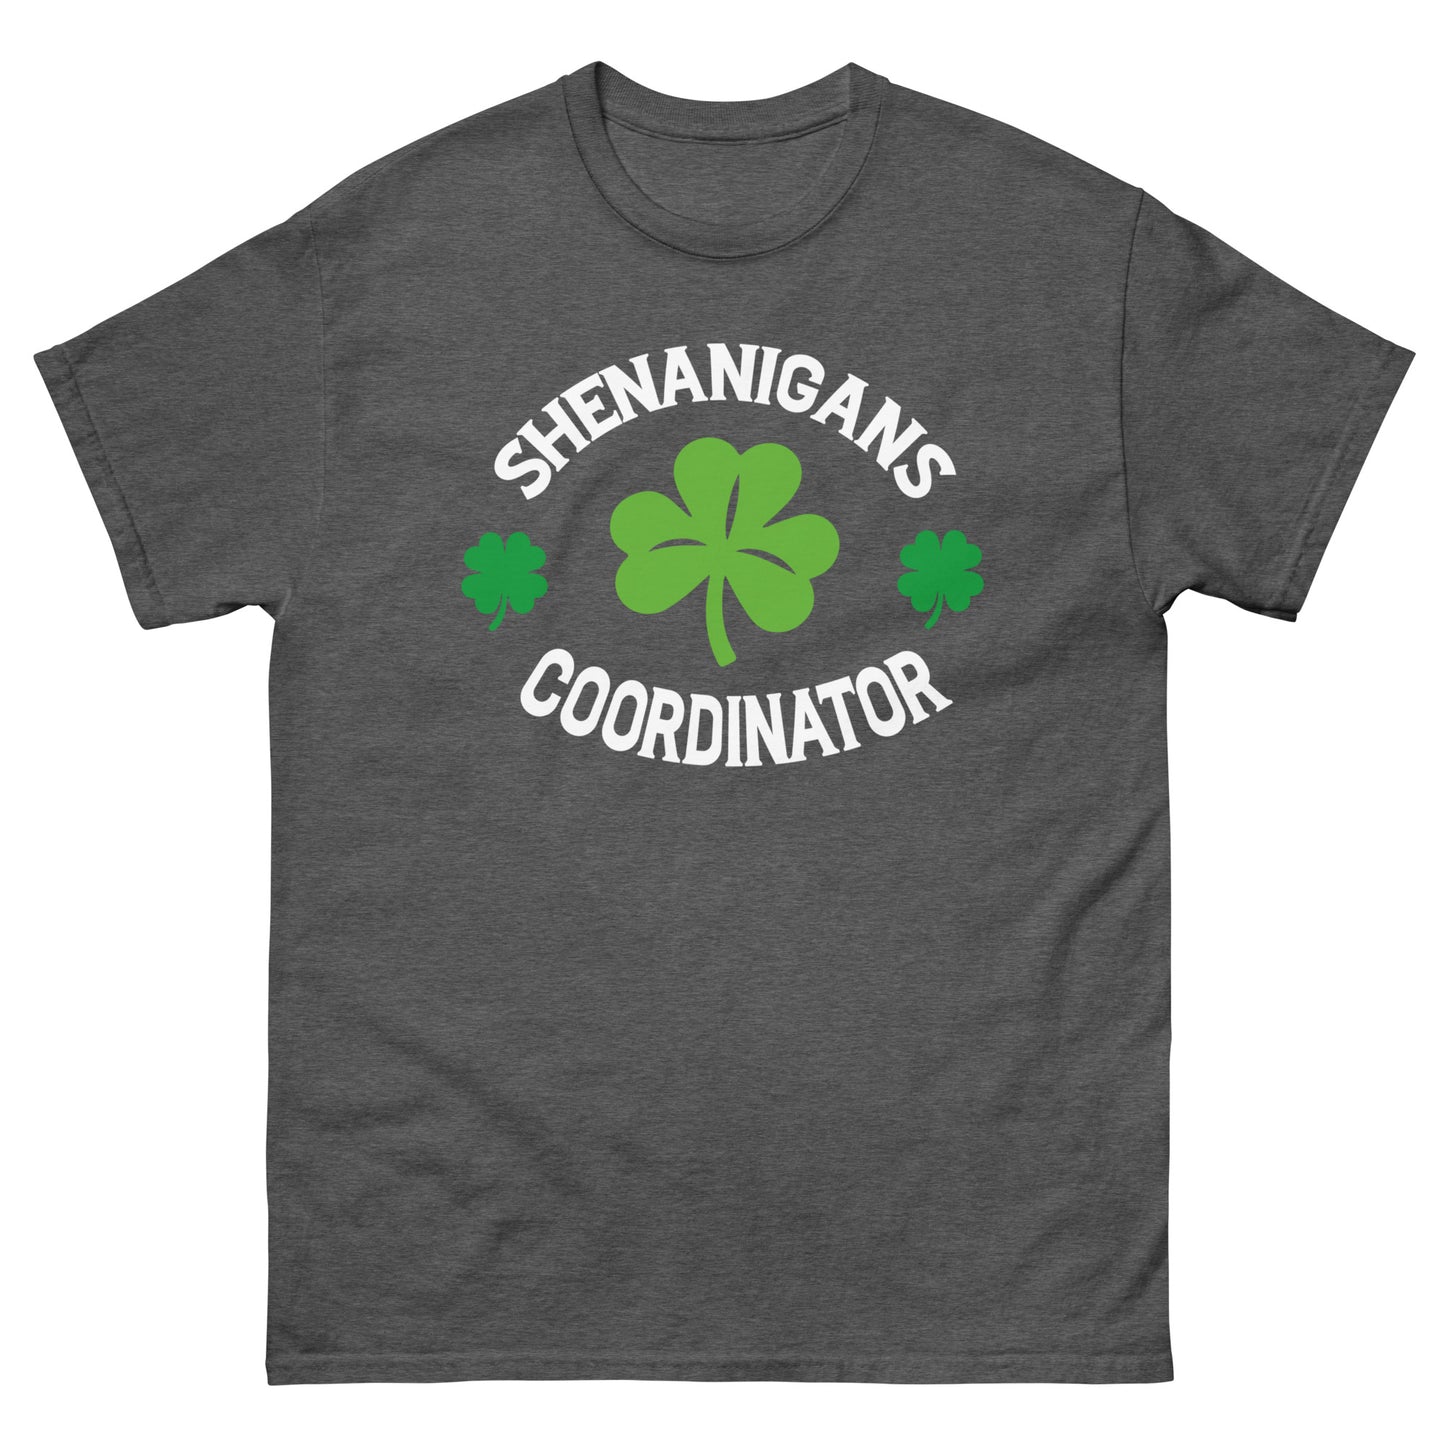 Shenanigan coordinator - St. Patrick's Day T-Shirt